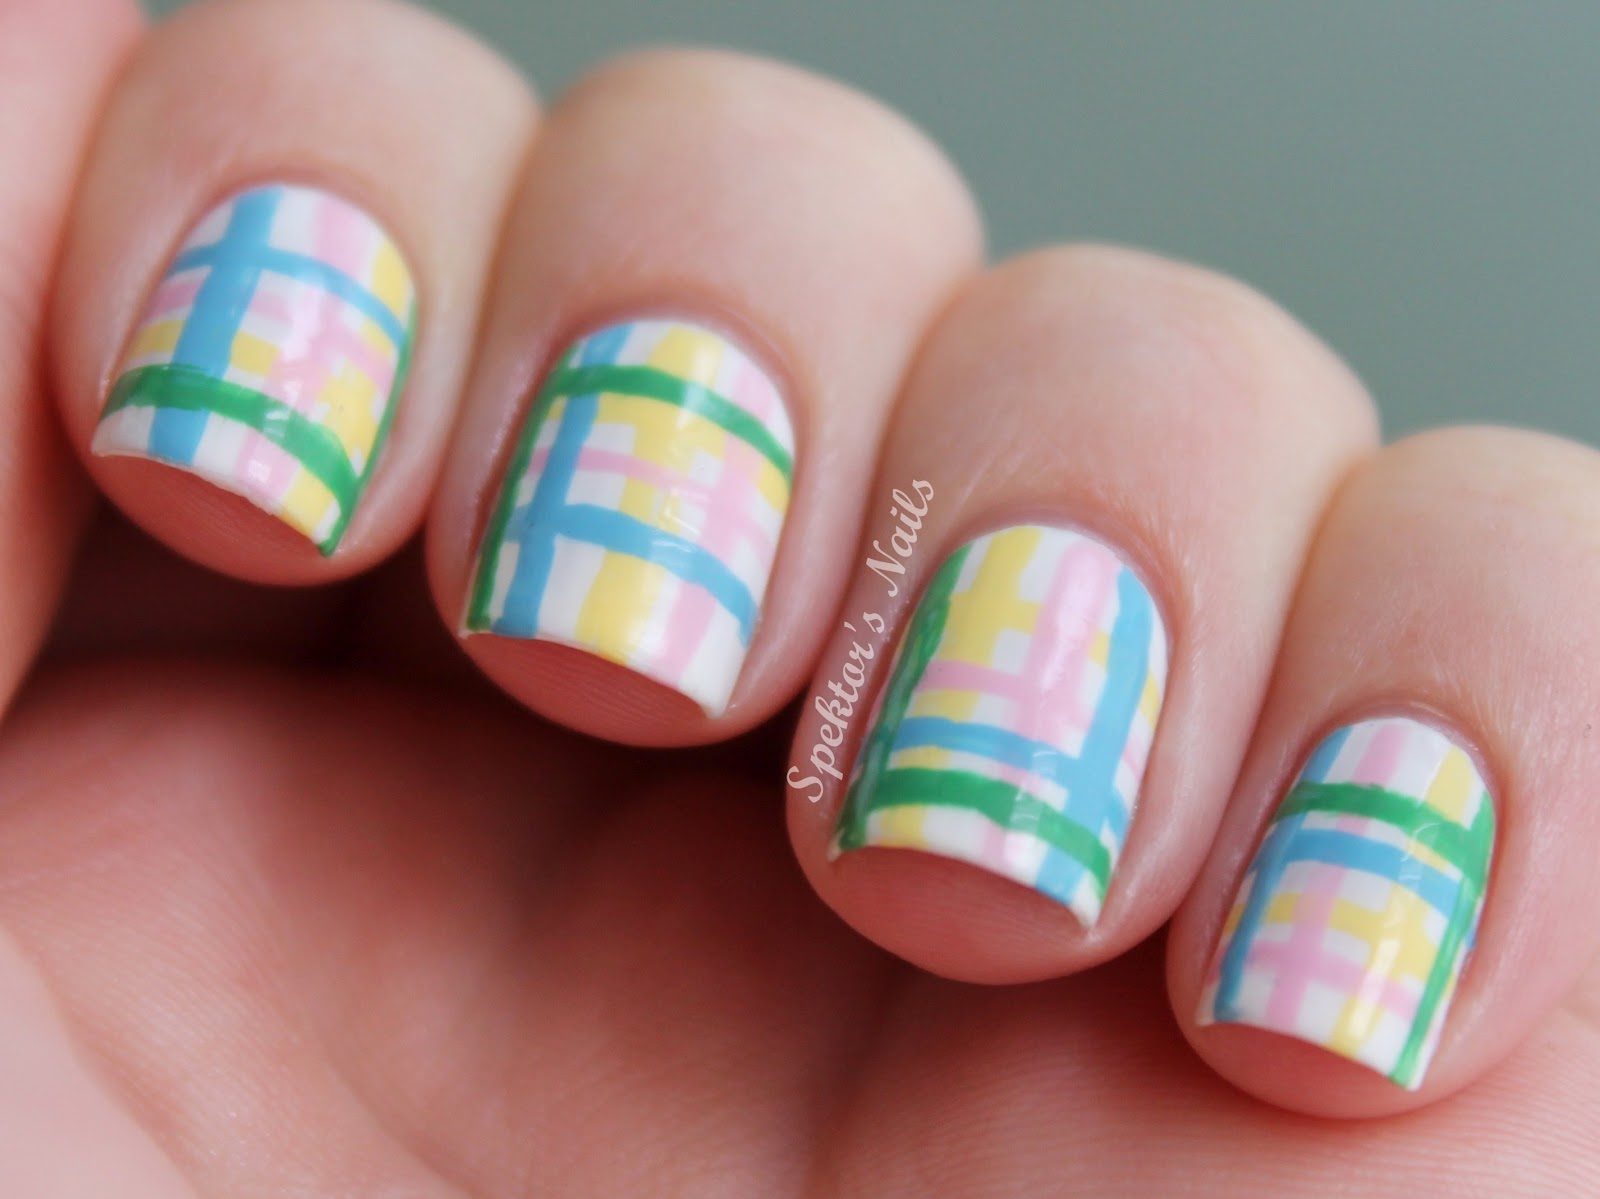 10. Pastel Striped Nail Art - wide 4